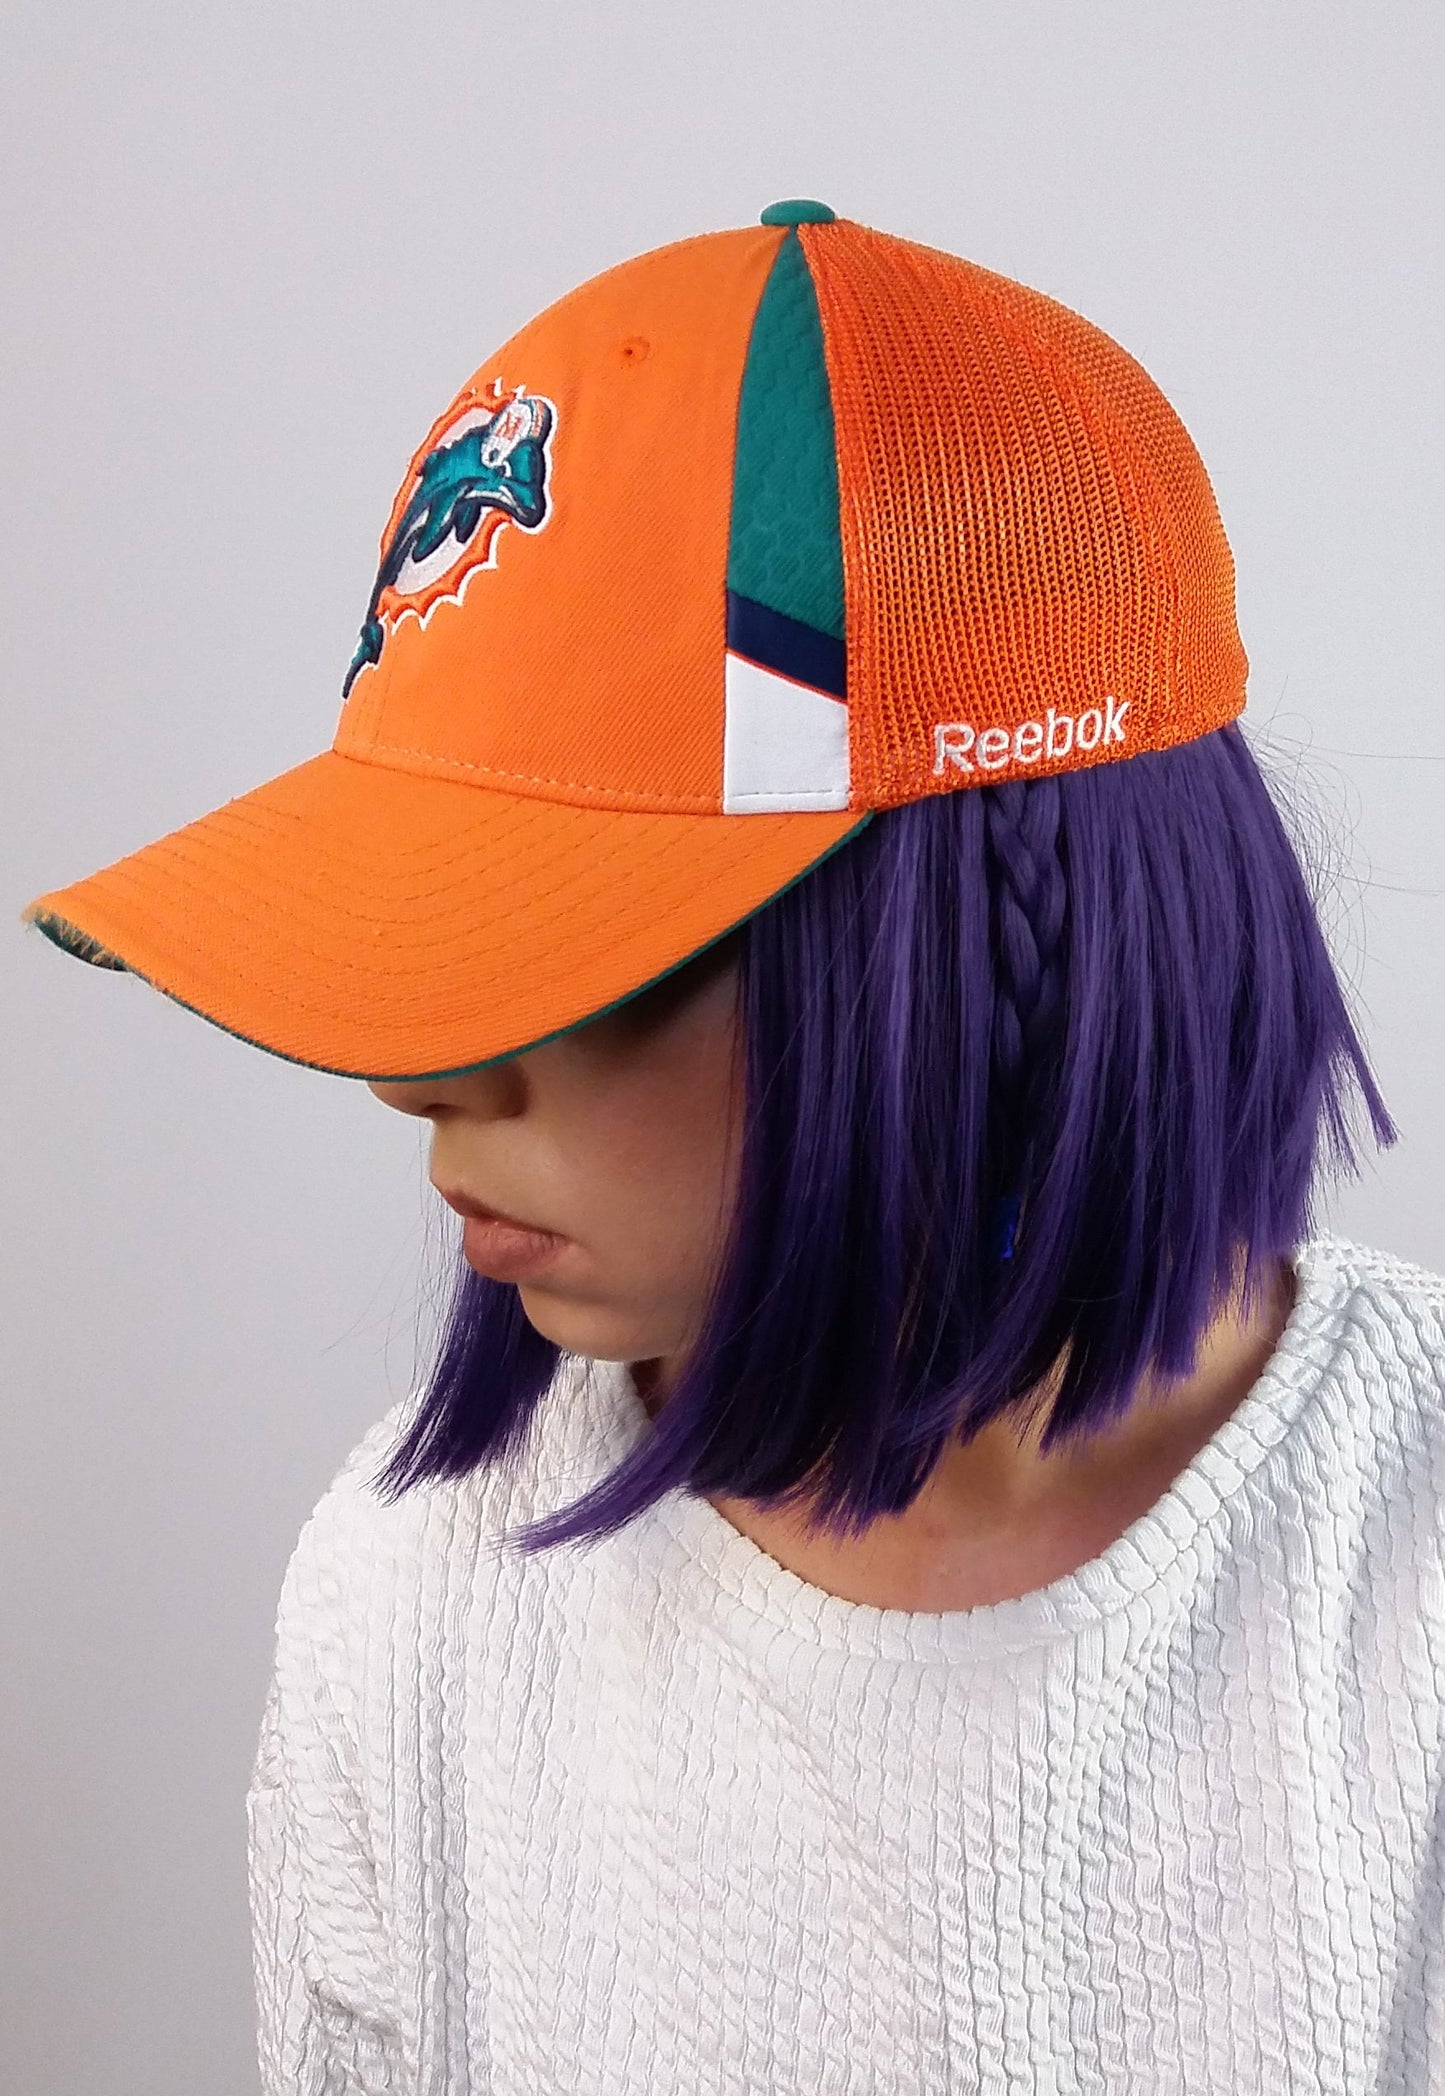 REEBOK Miami Dolphins NFL Football Baseball Hat - size L/XL